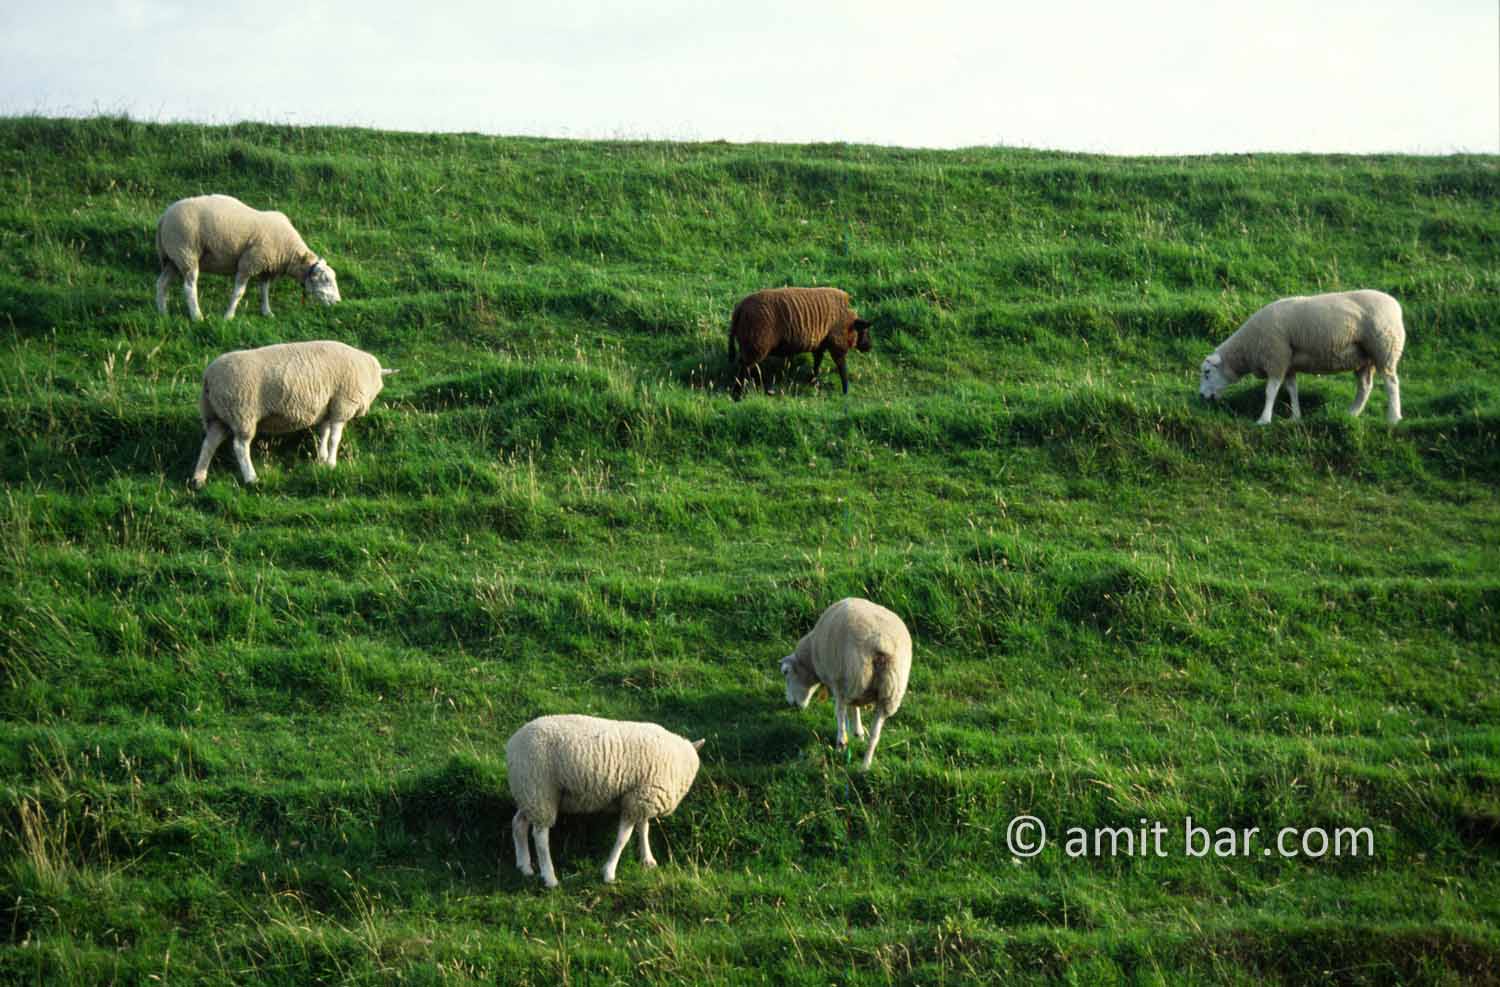 Black sheep: Sheeps grazing on dike in Zeeland, The Netherlands